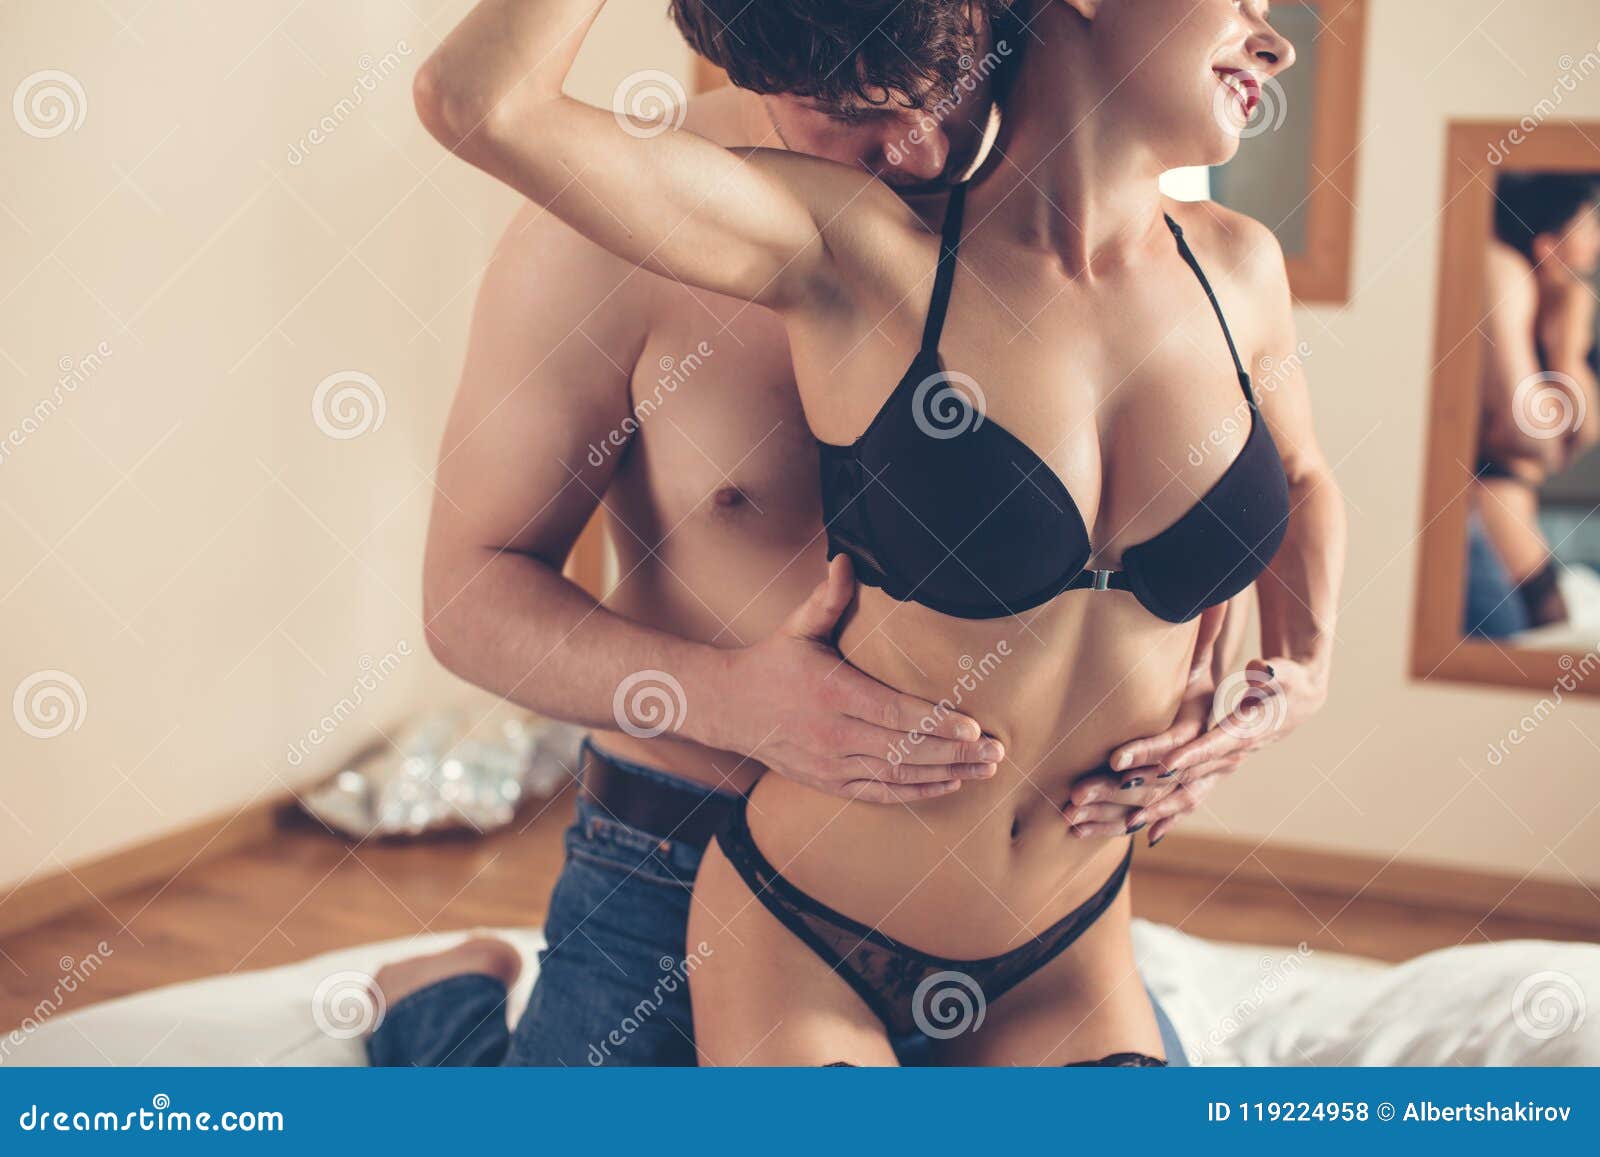 dena lang add hot women and sex photo